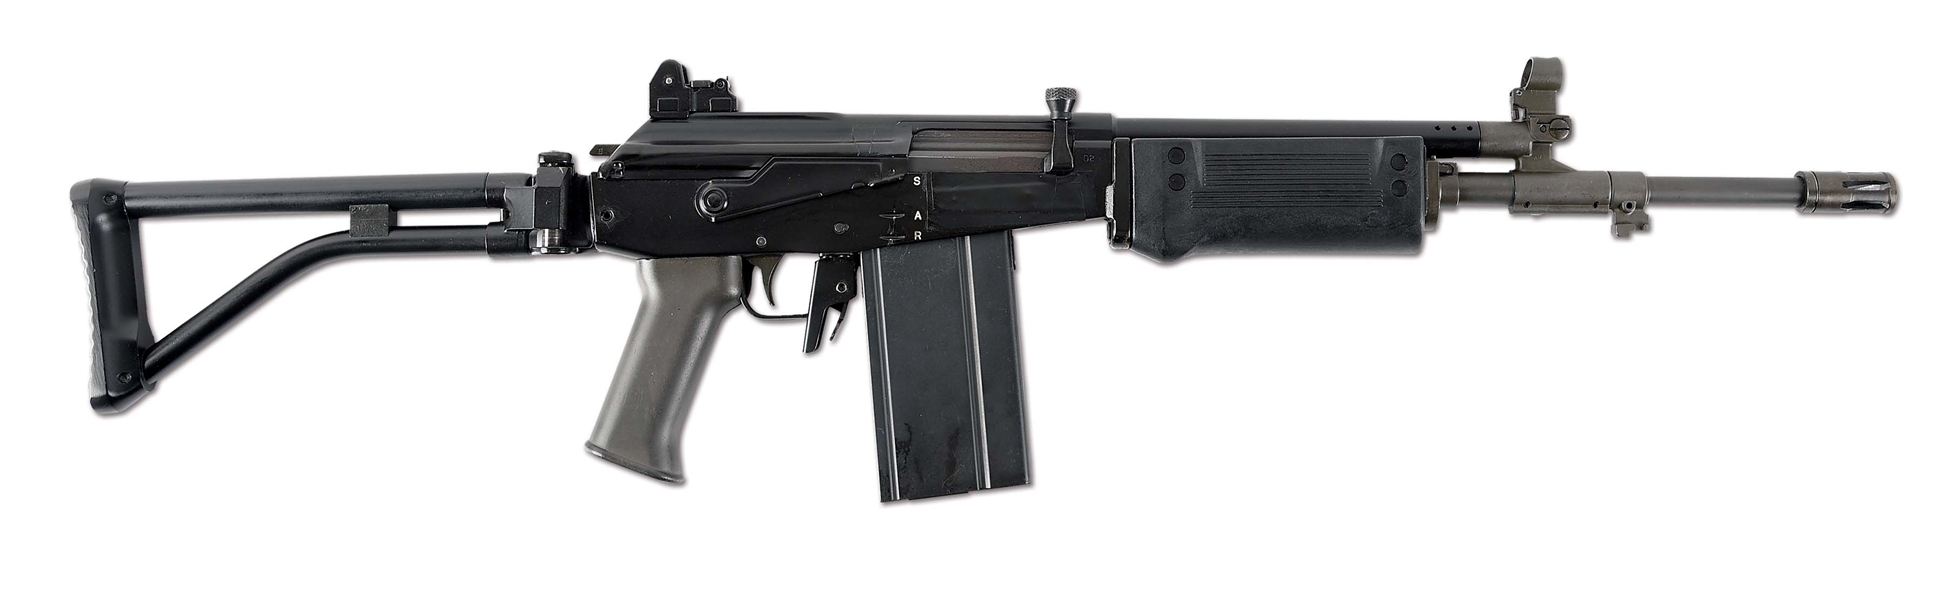 (N) DESIRABLE ISRAELI MILITARY INDUSTRIES GALIL MODEL MR 338 (7.62 MM) MACHINE GUN (FULLY TRANSFERABLE).